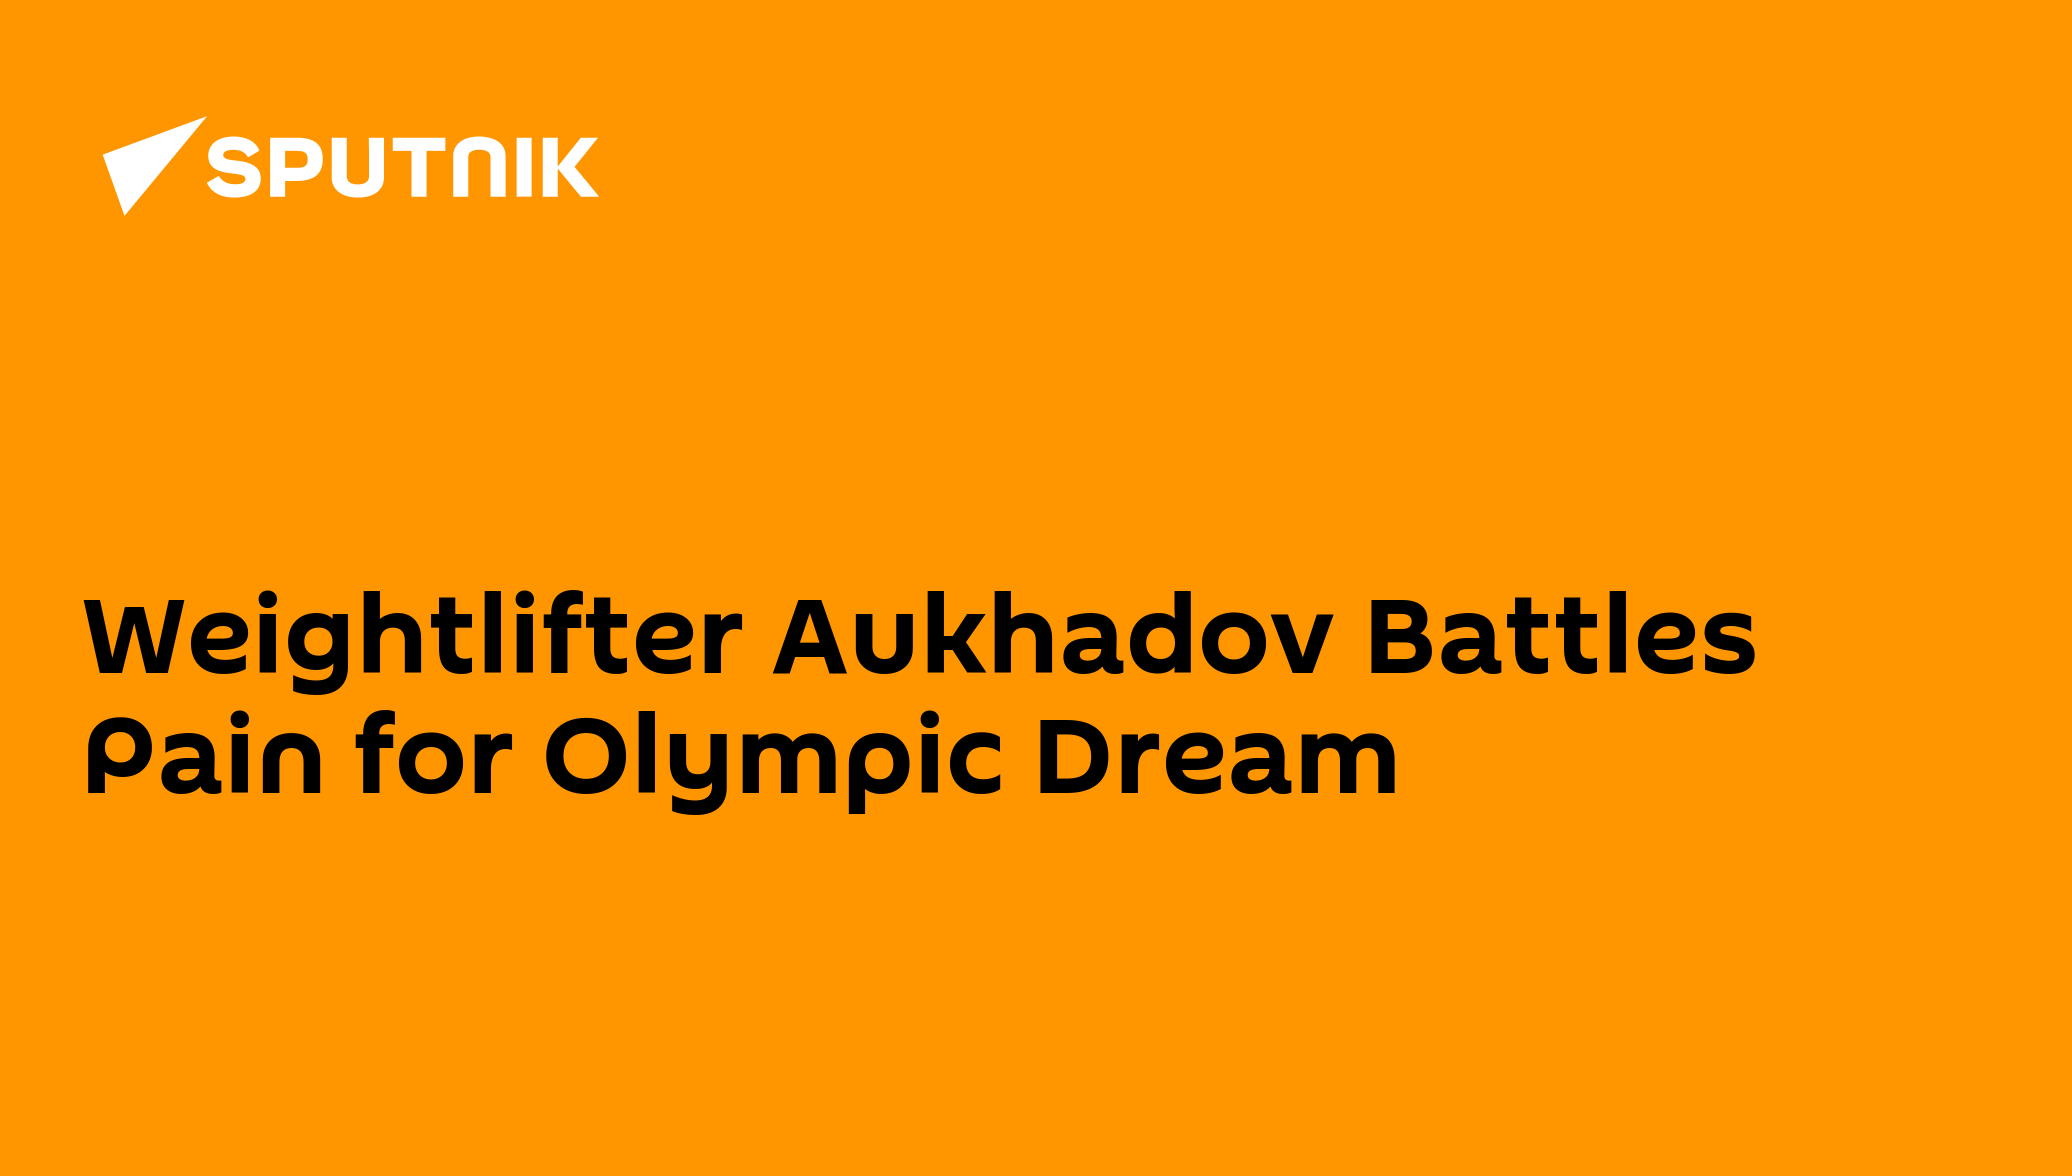 aukhadov #eleiko #squats  Olympic lifting, Powerlifting, Olympics